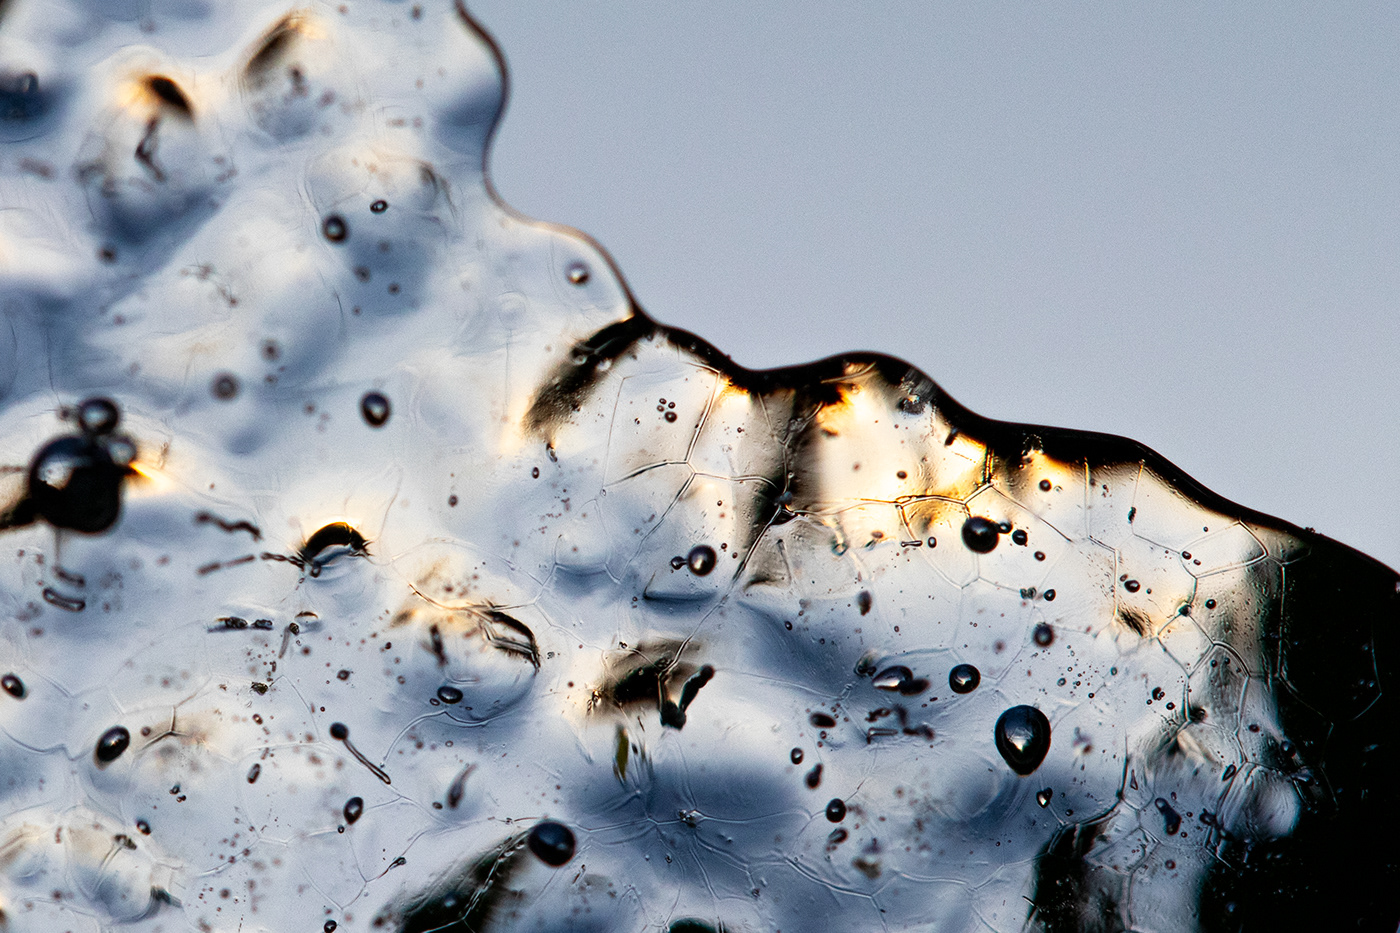 bretagne freezing frost macrophotographie macrophotography neige